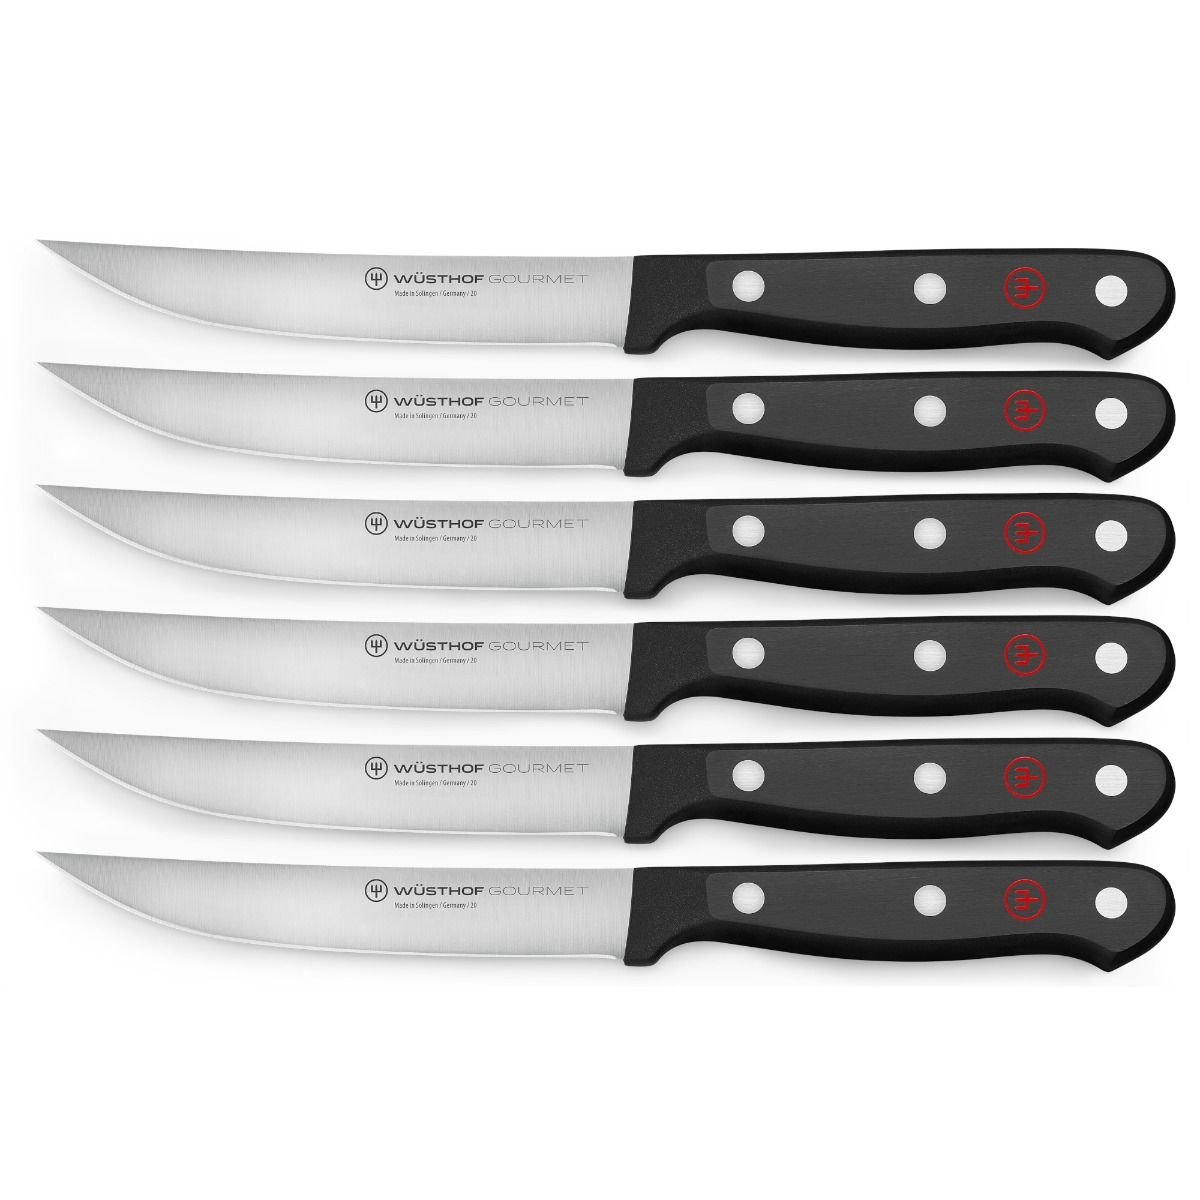 Kitchenaid Gourmet 4.5 In. Serrated Steak Knives 4 Pc.